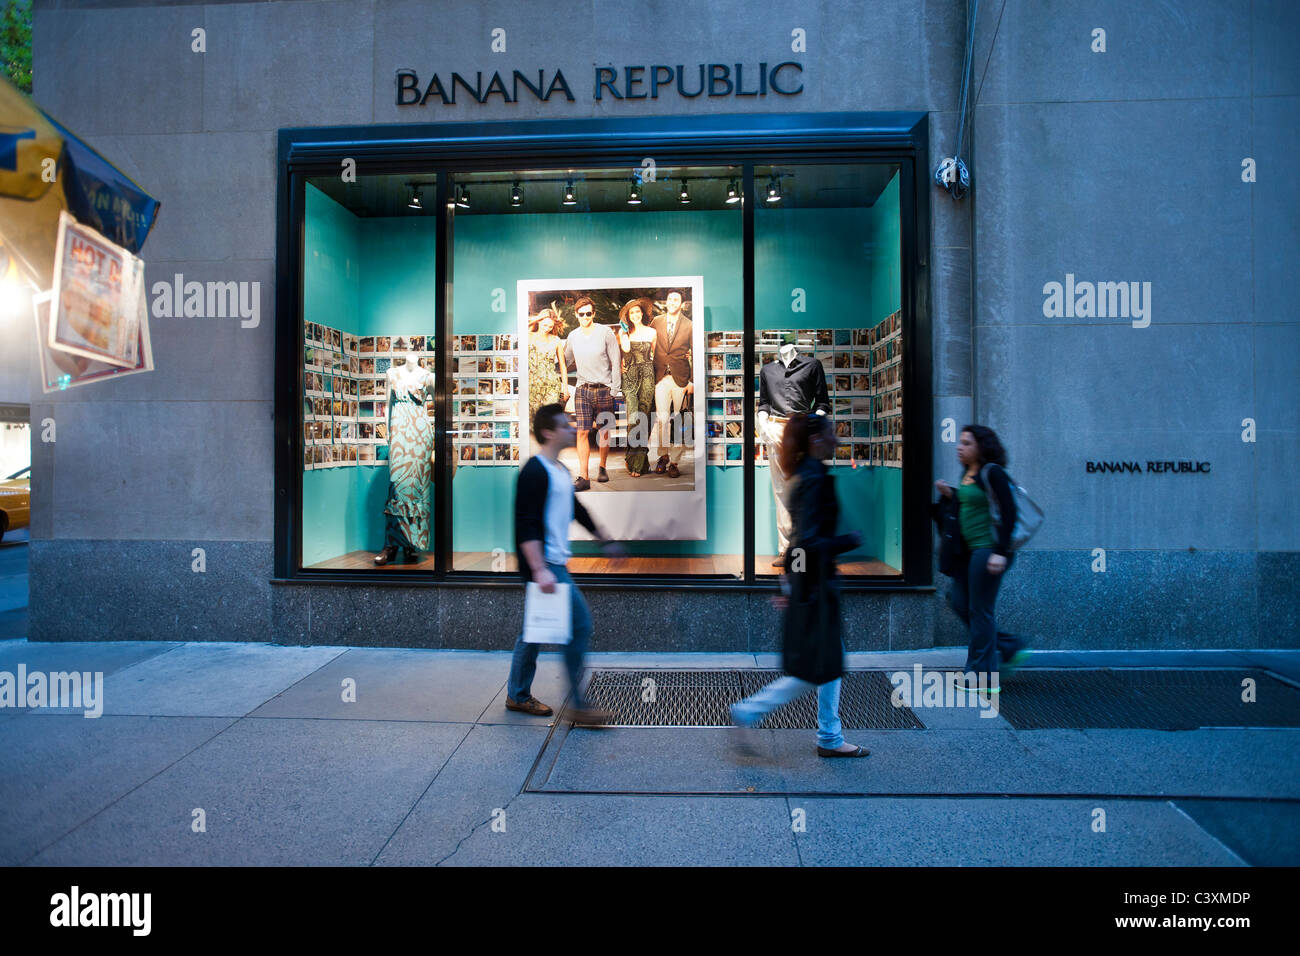 A Banana Republic store in midtown Manhattan in New York Stock Photo - Alamy